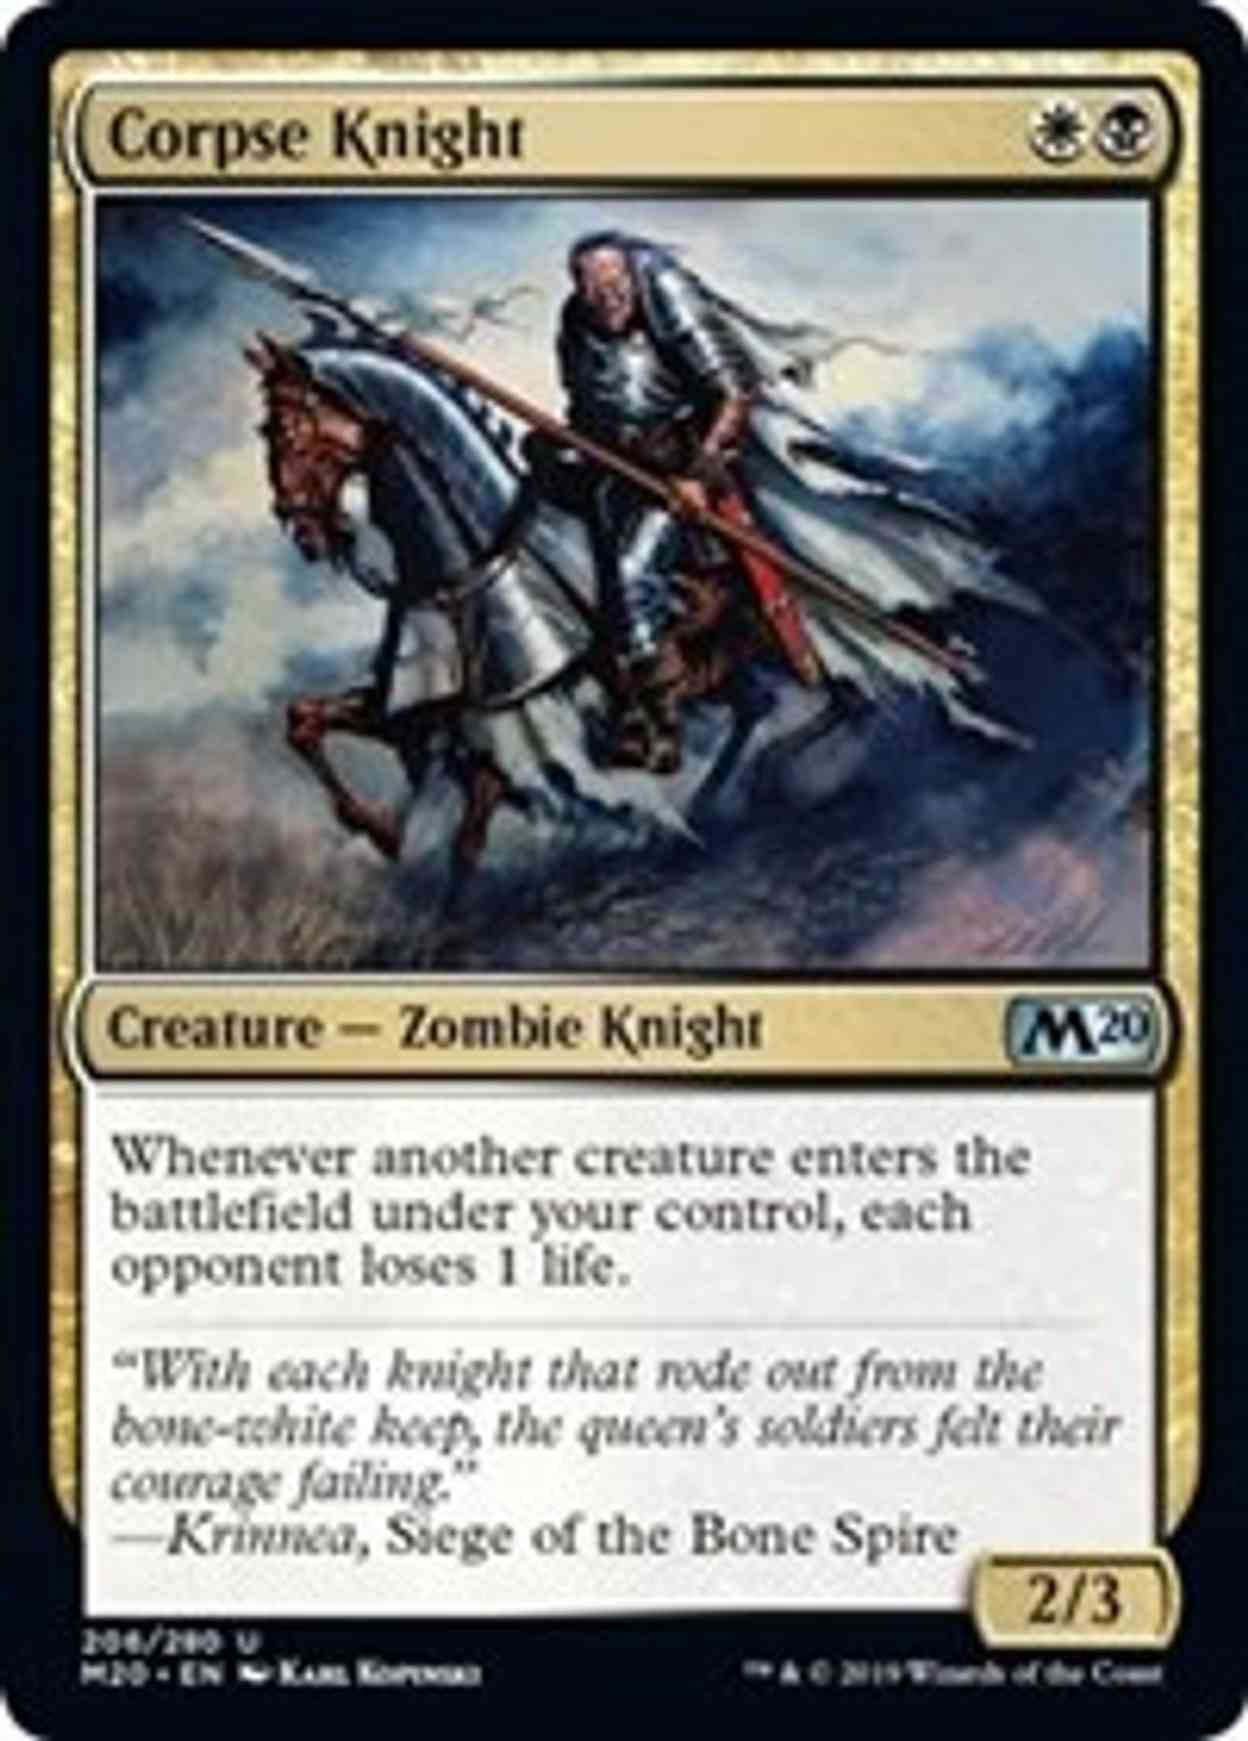 Corpse Knight (2/3 Misprint) magic card front